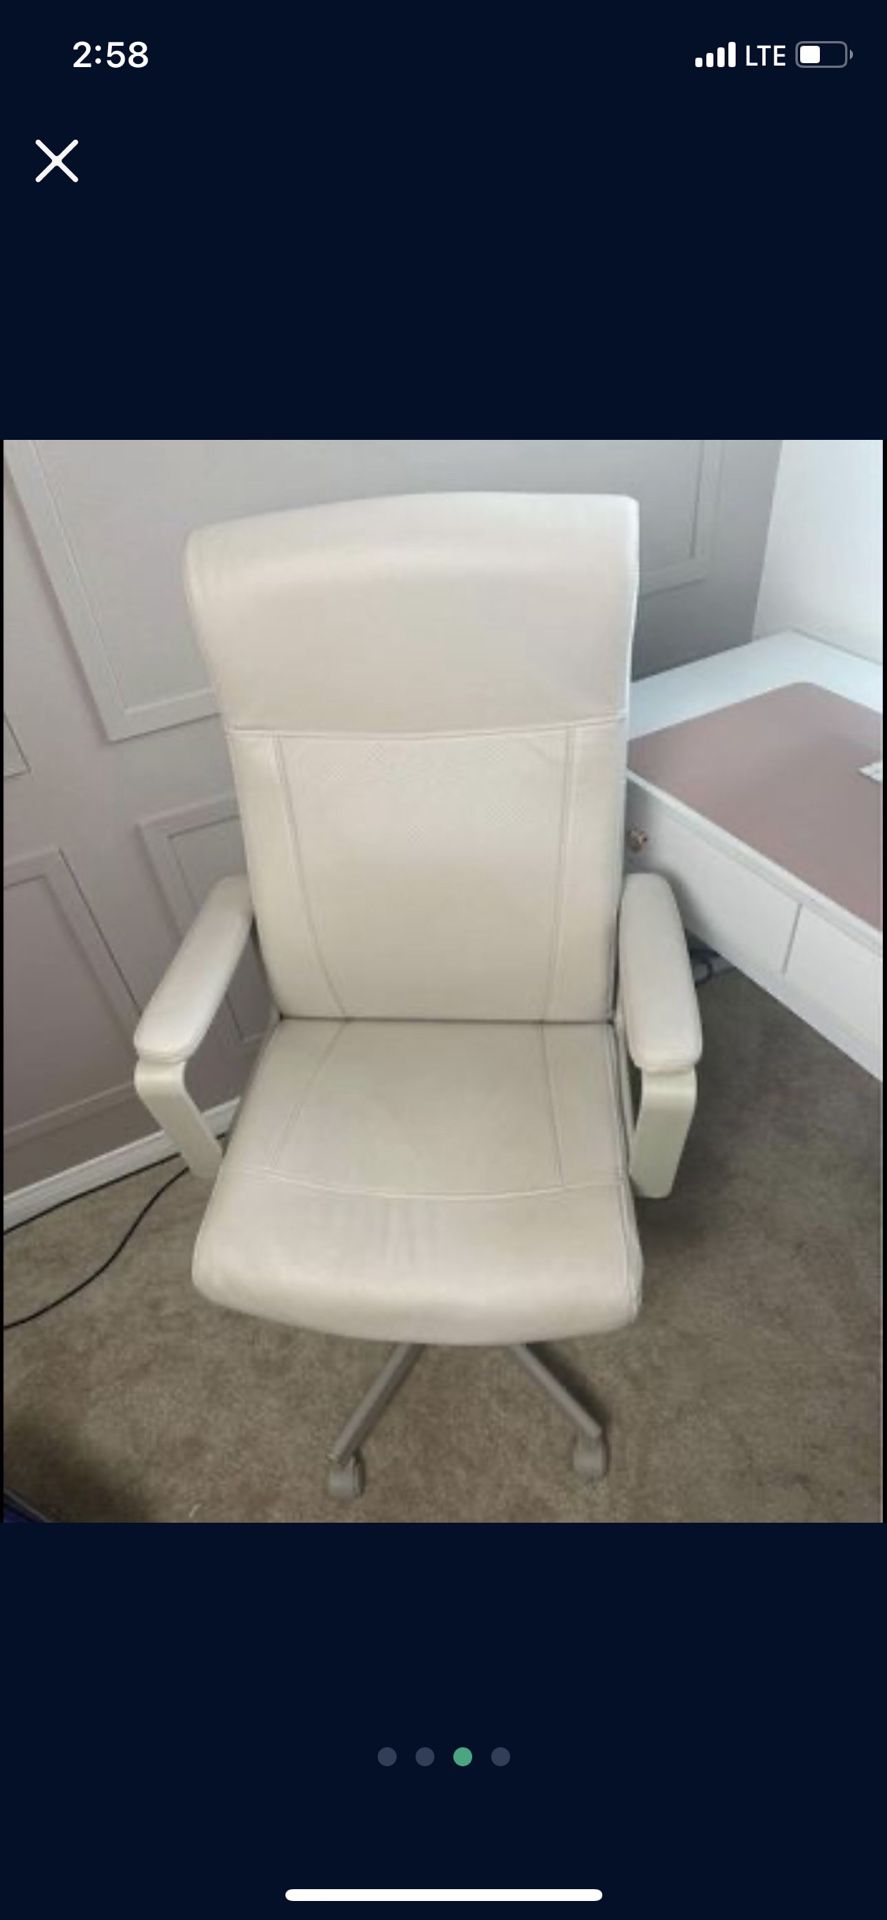 Office chair (beige)